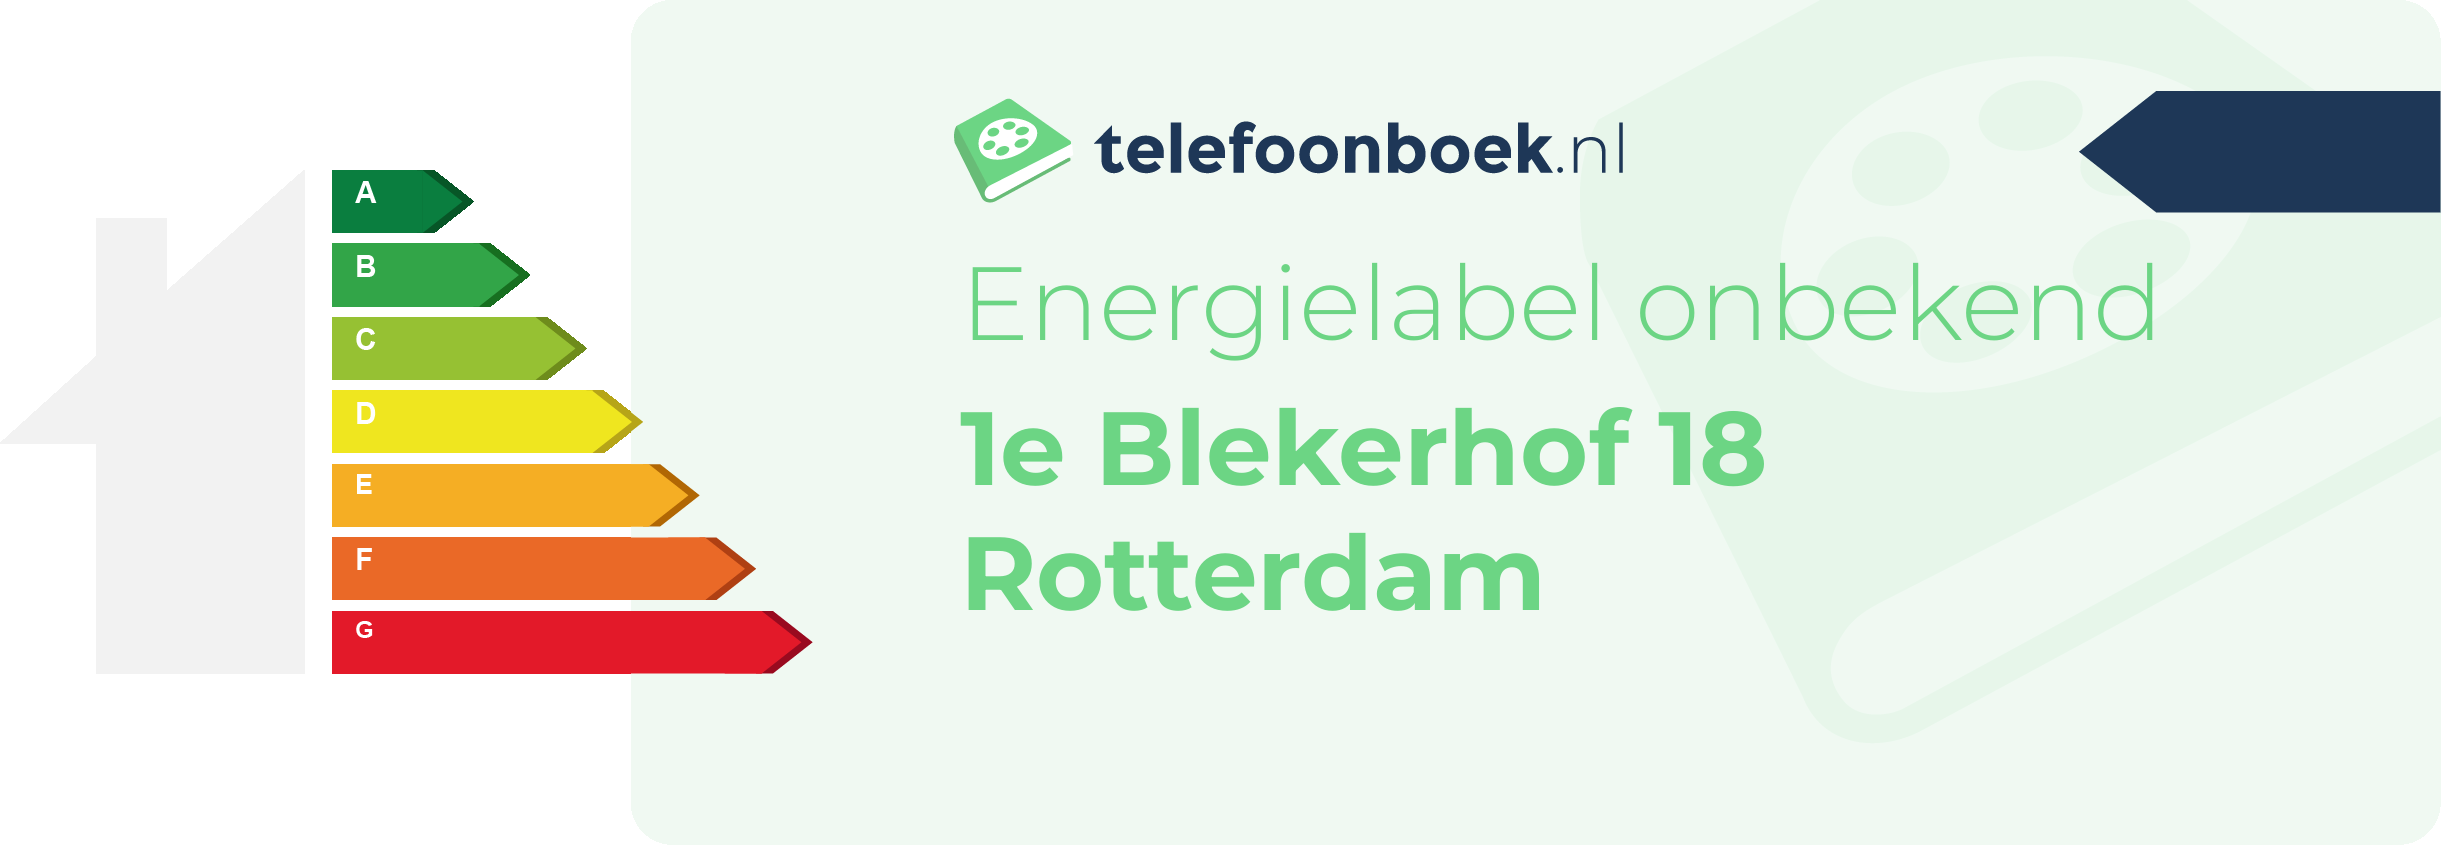 Energielabel 1e Blekerhof 18 Rotterdam